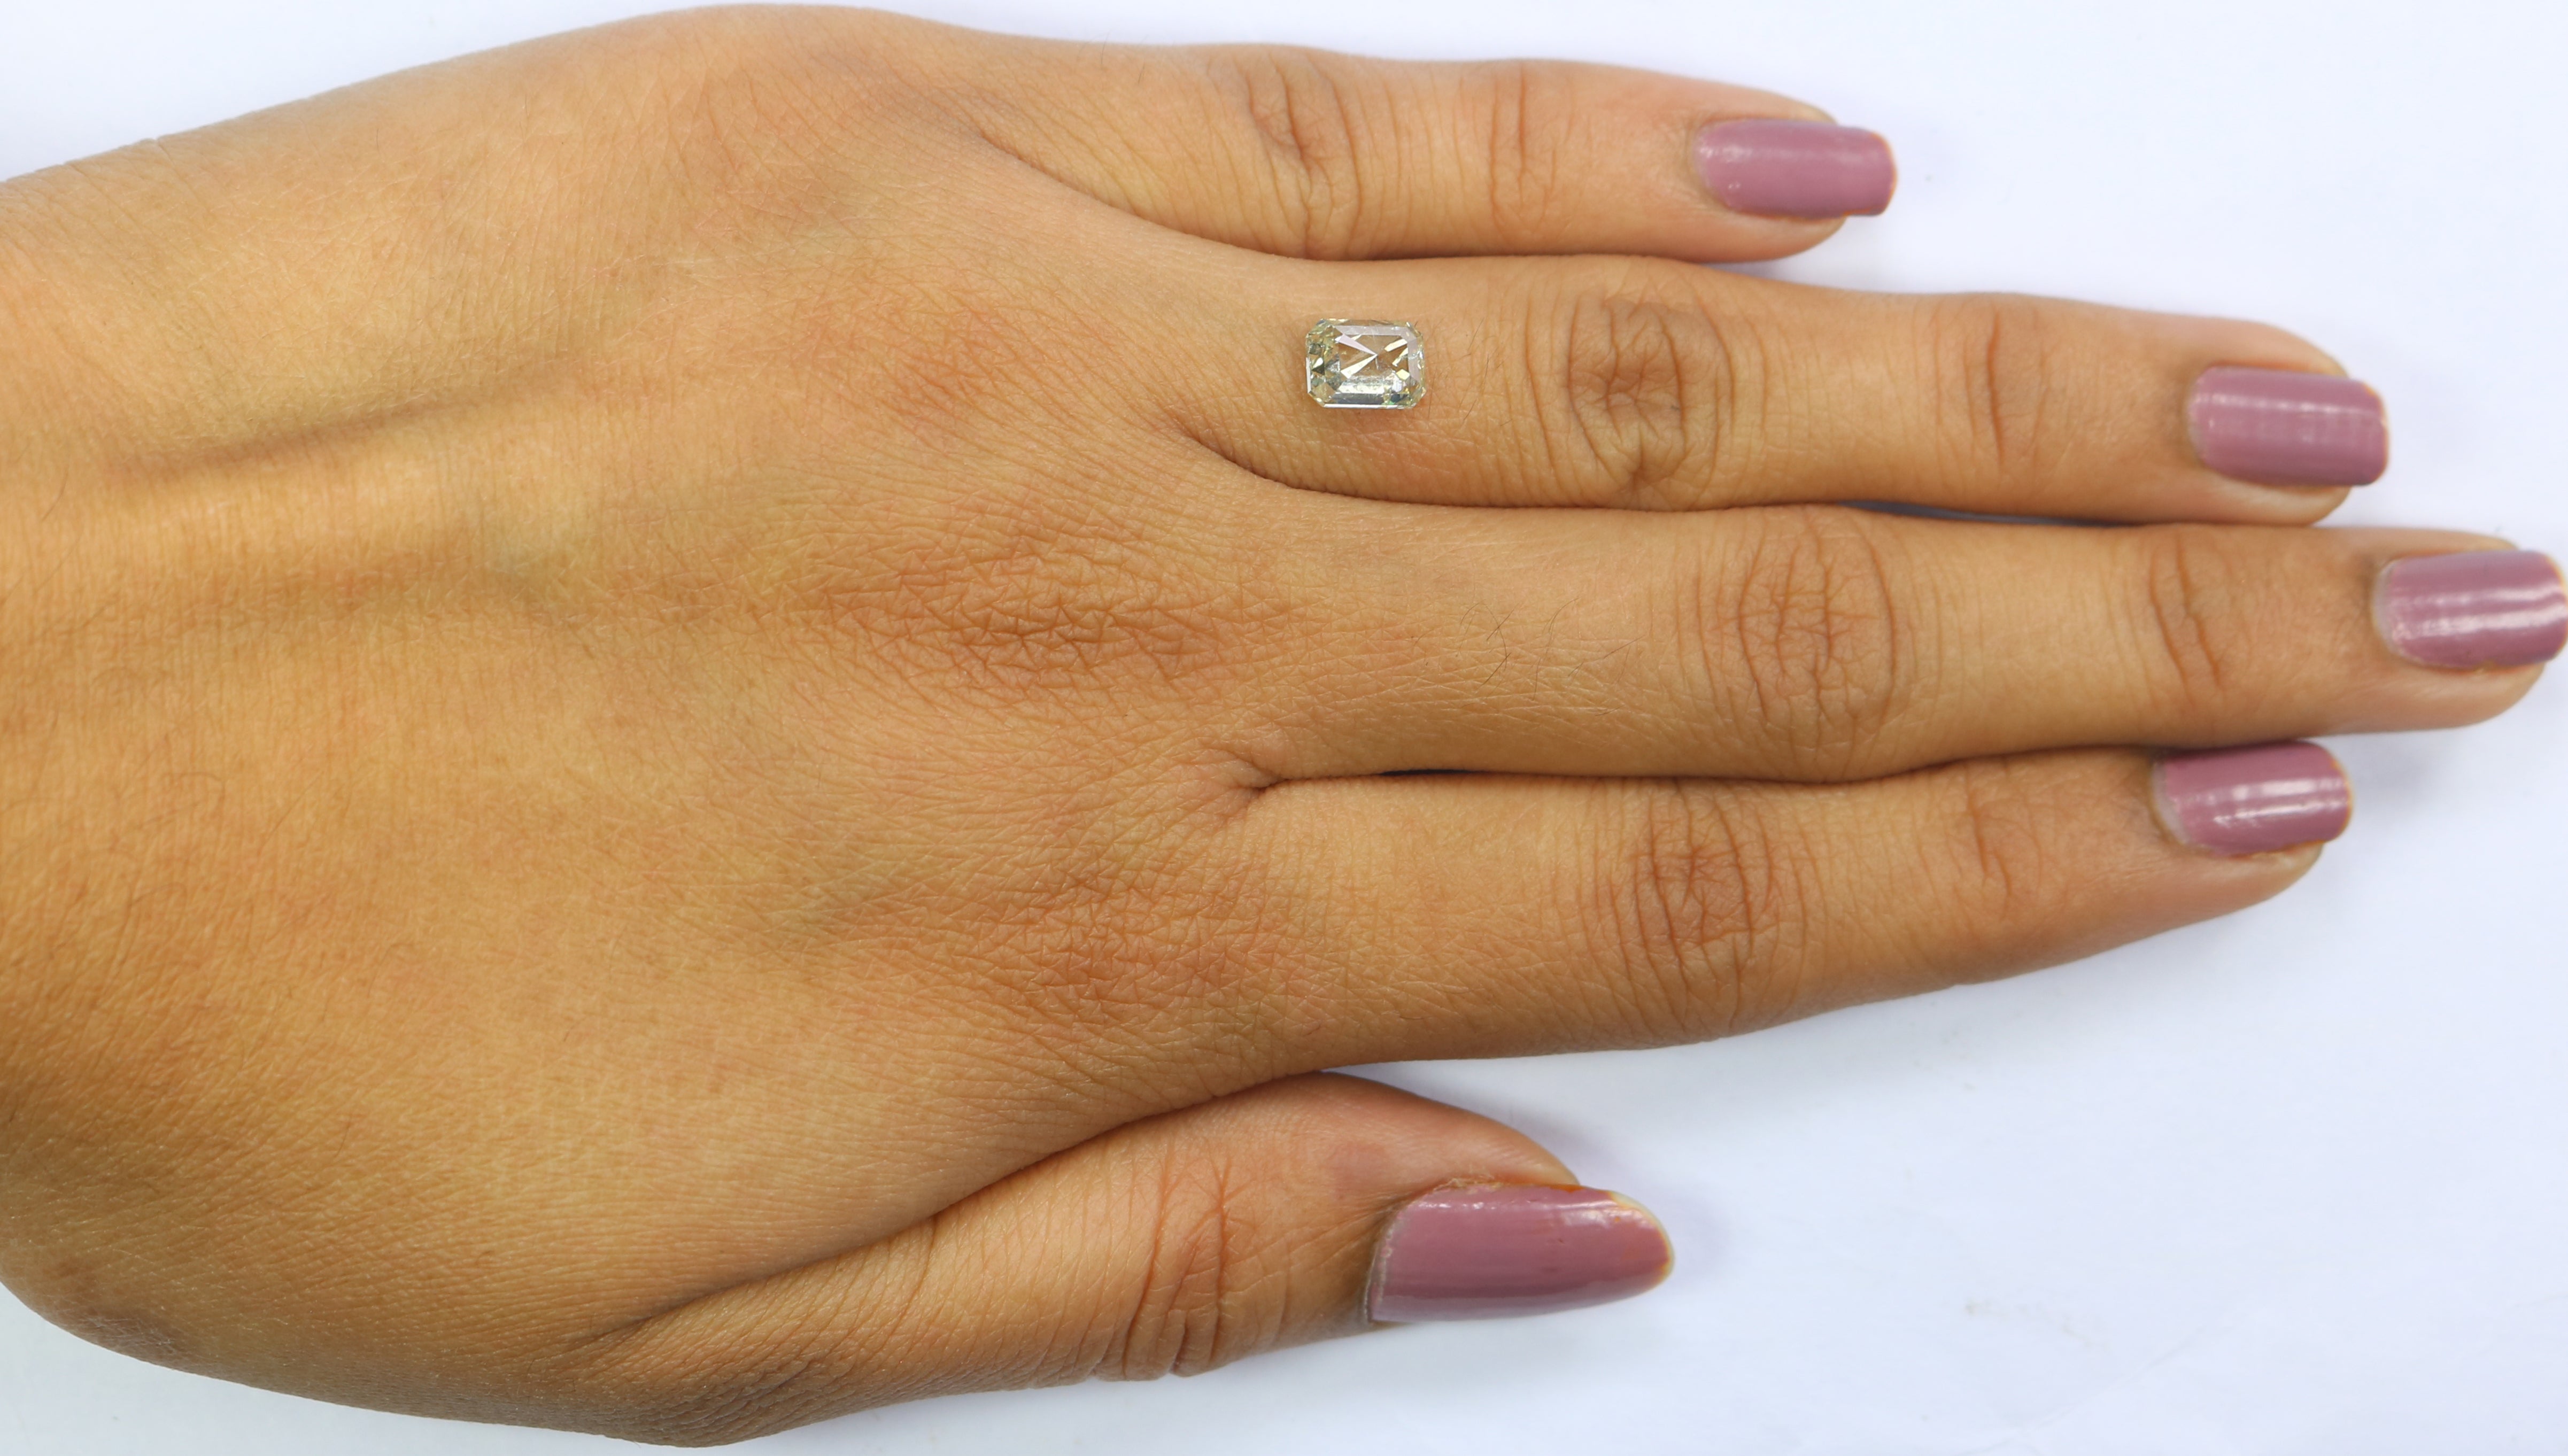 Natural Loose Emerald Shape White - J Color Diamond 1.16 CT 6.67 MM Emerald Shape Rose Cut Diamond L2661